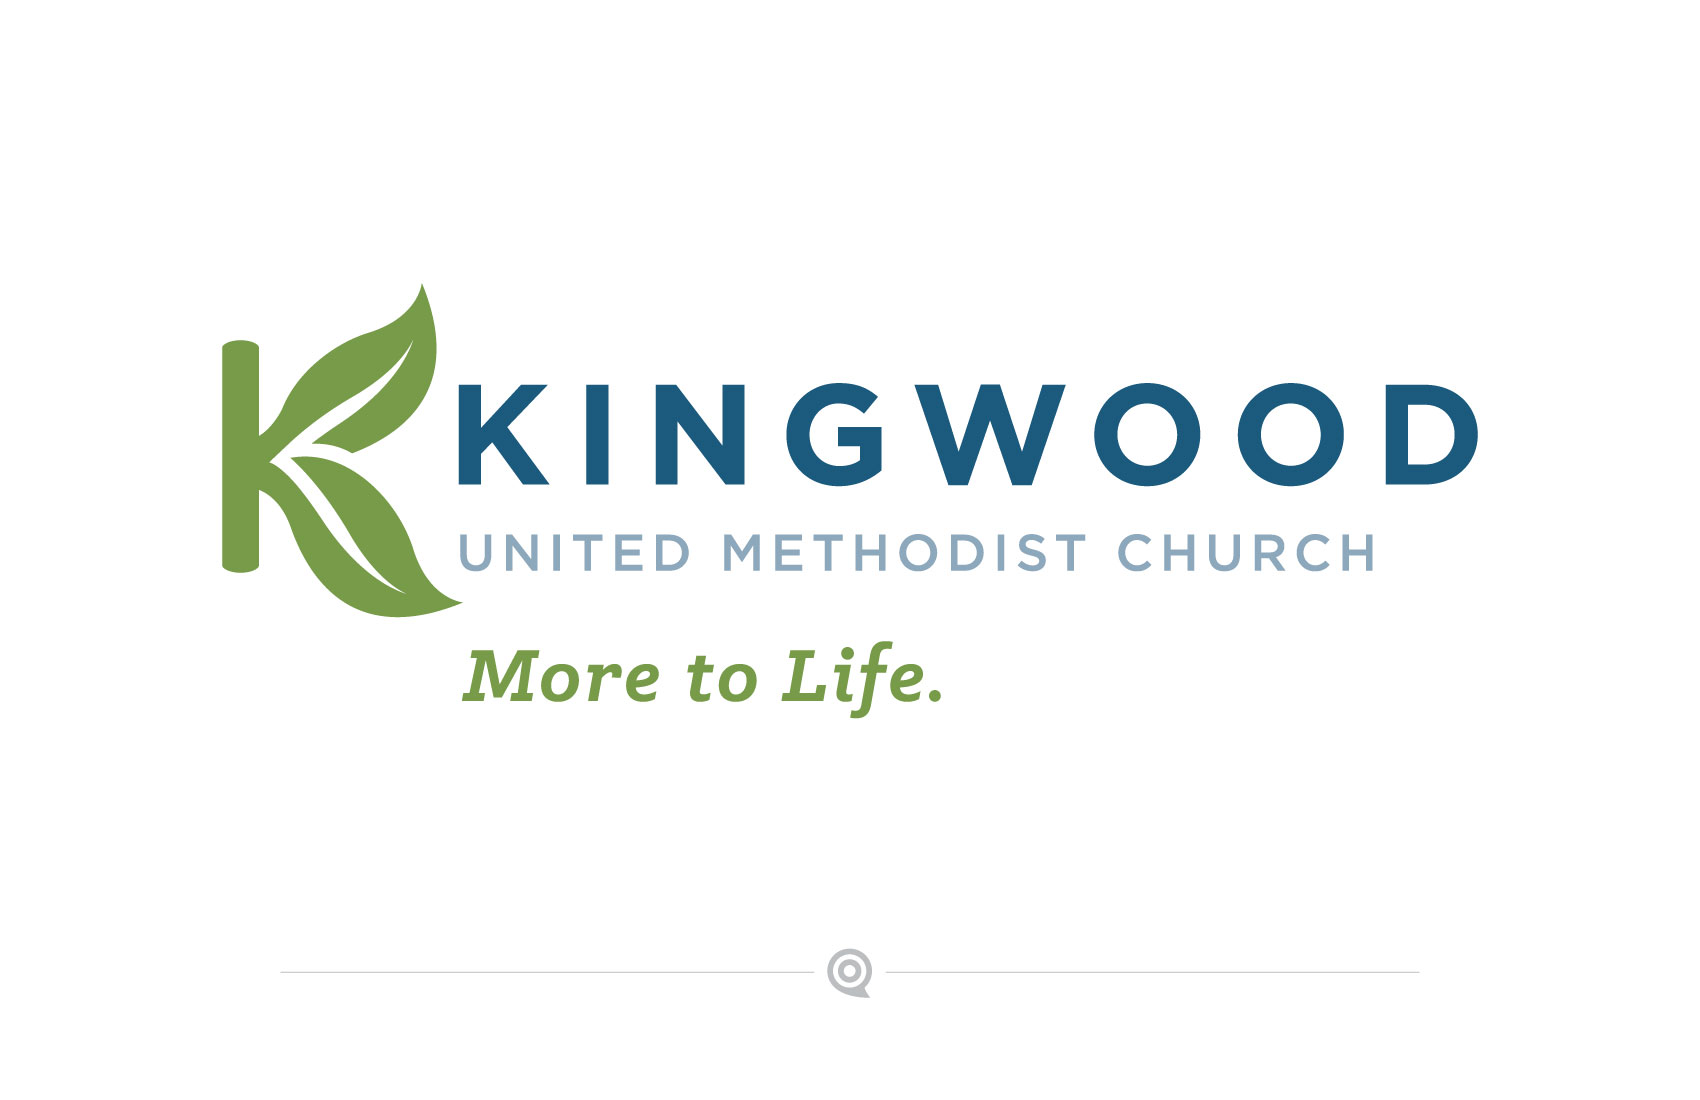 Kingwood United Methodist Church | More to Life.